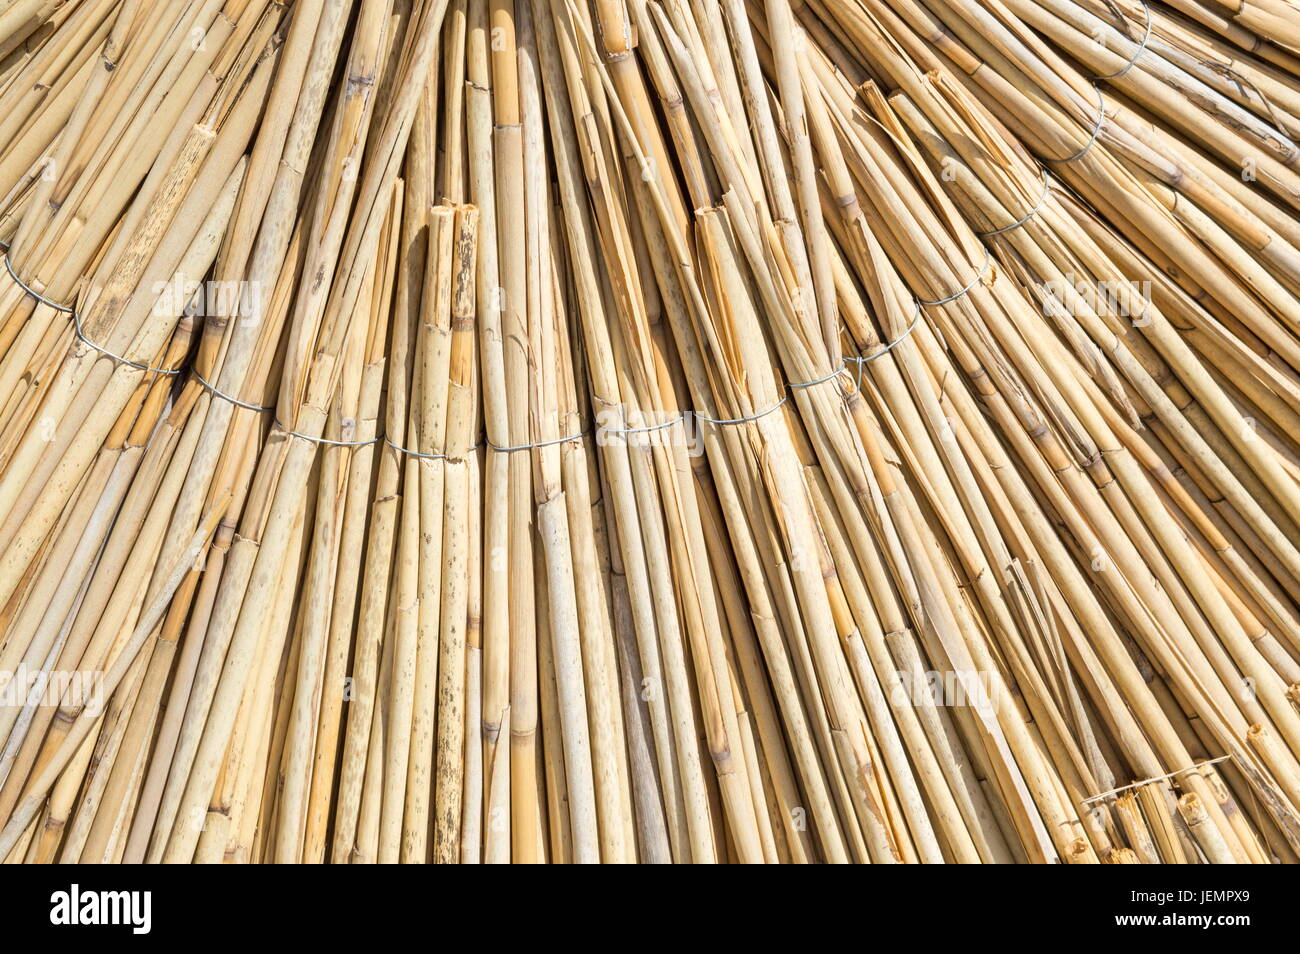 Texture of straw beach umbrella close up Stock Photo